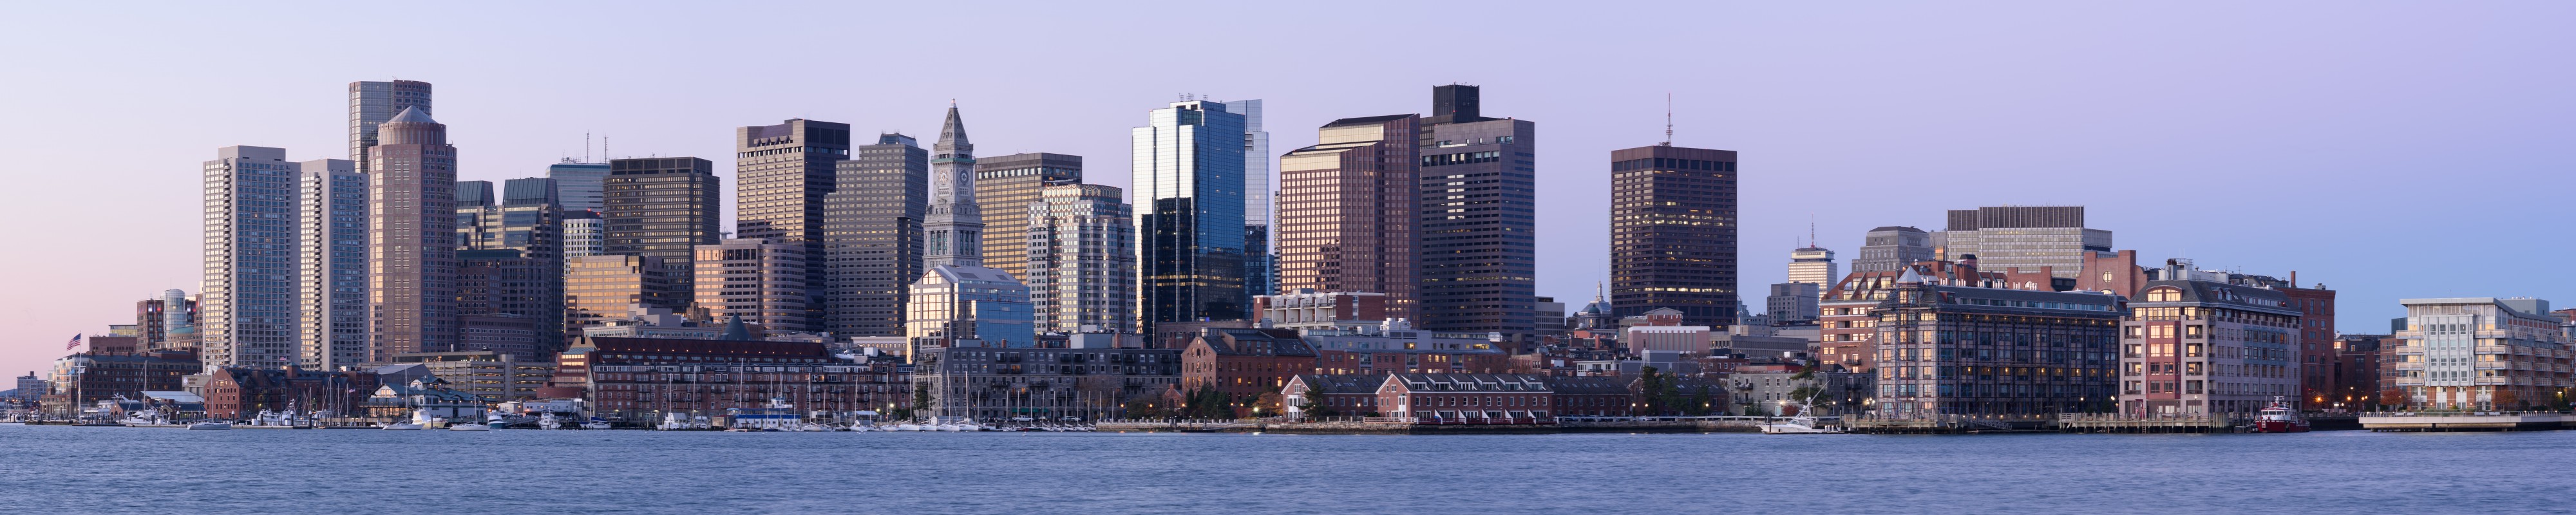 Boston skyline from East Boston November 2016 panorama 2